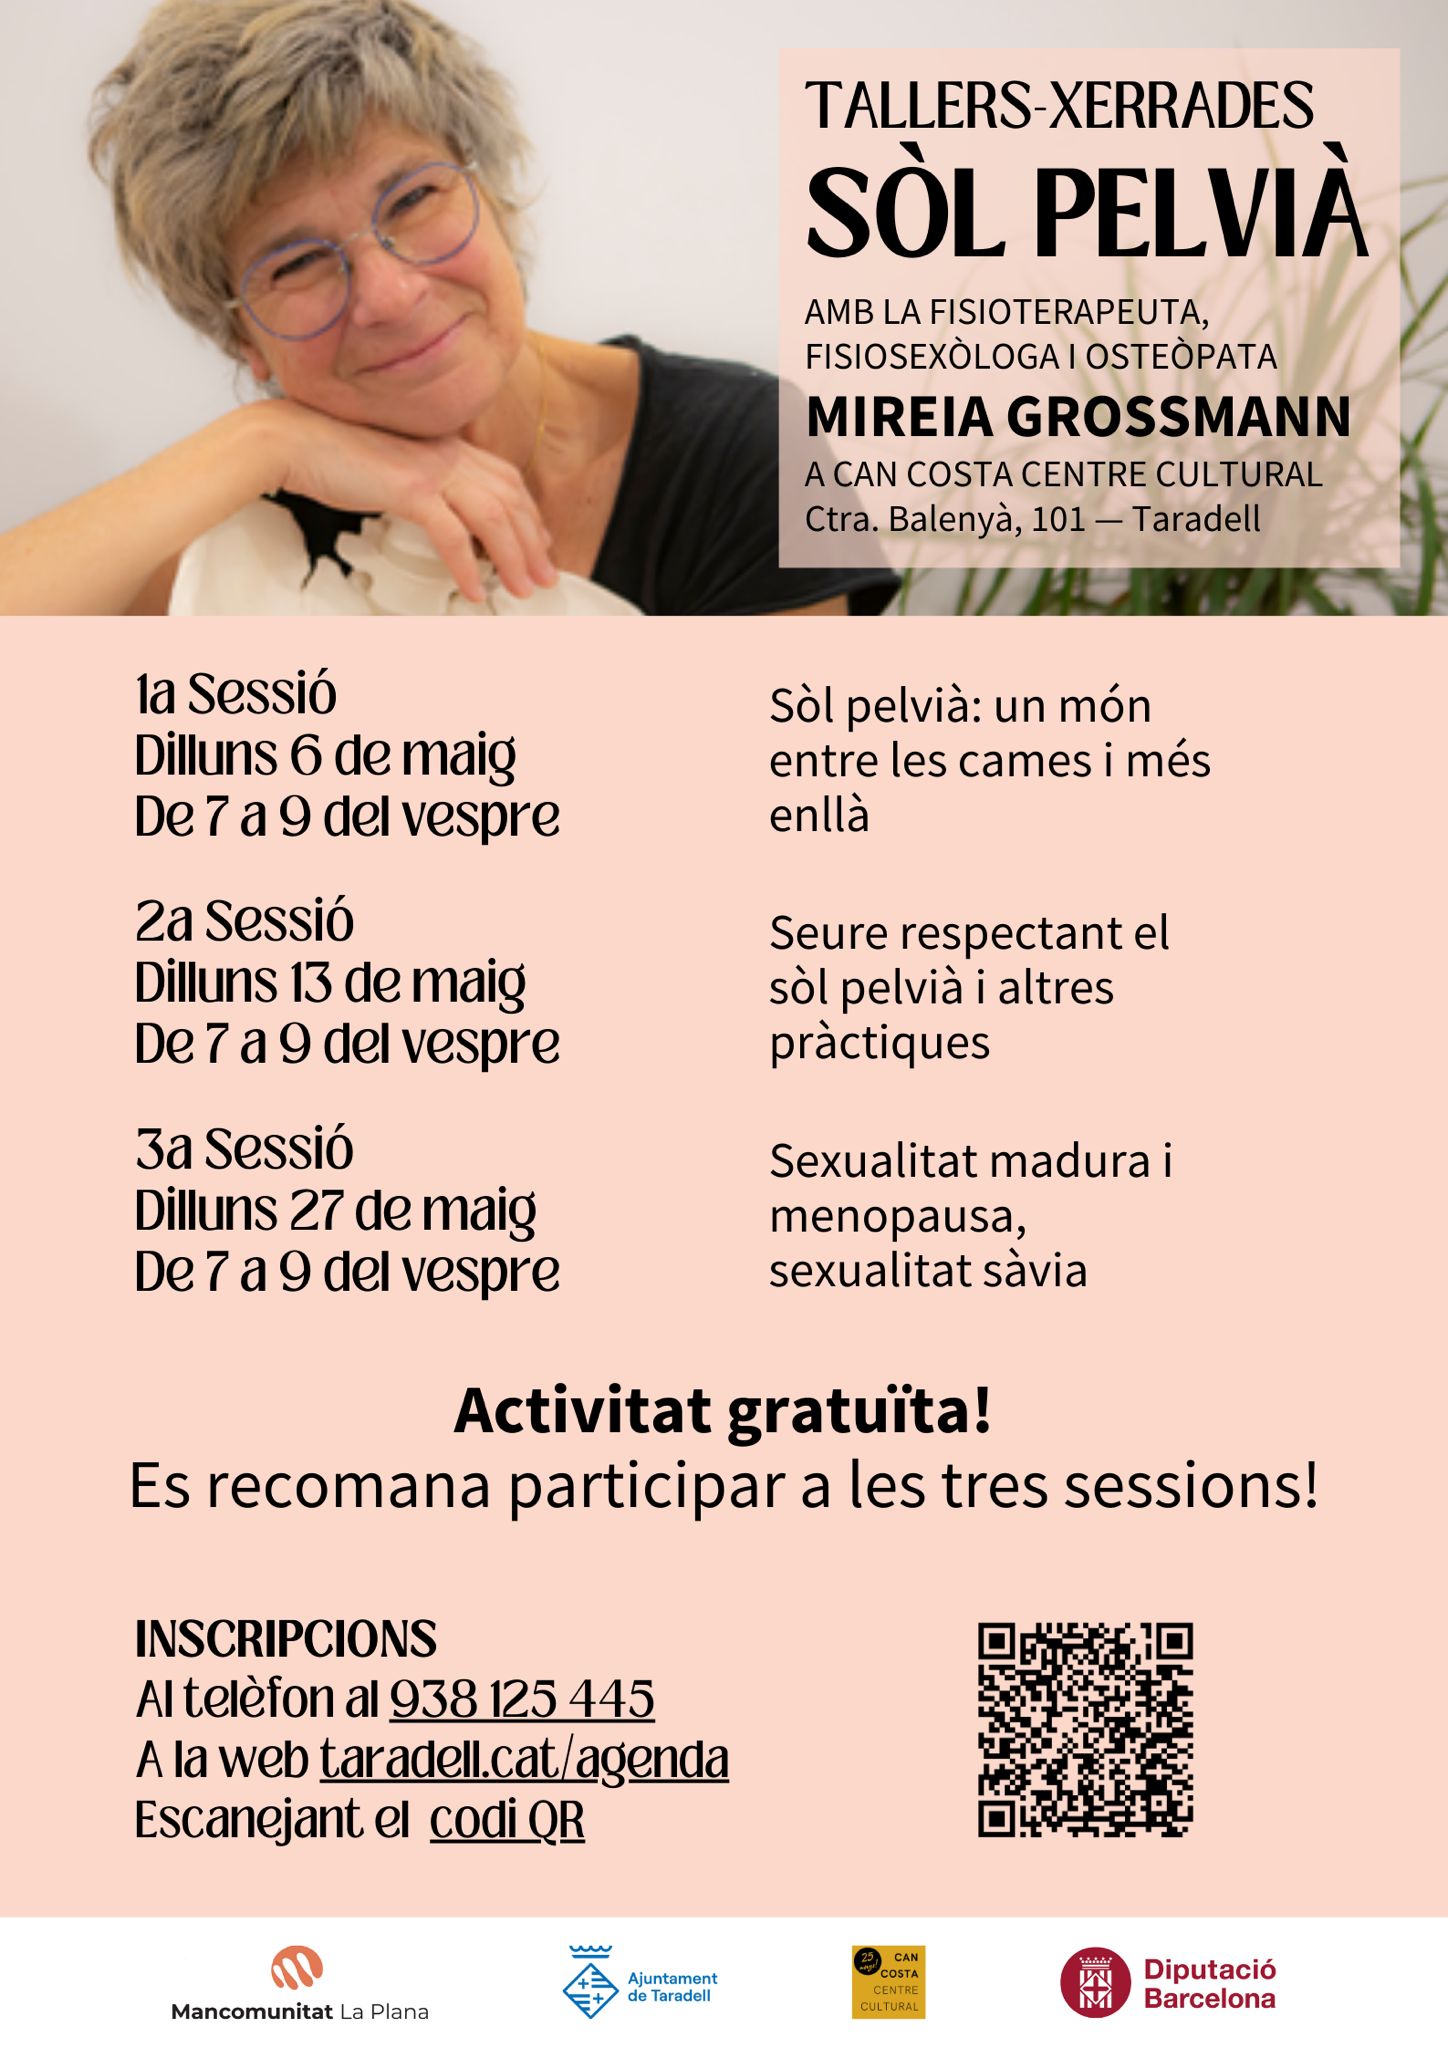 Cartell dels tallers-xerrades sobre sòl pelvià amb Mireia Grossmann